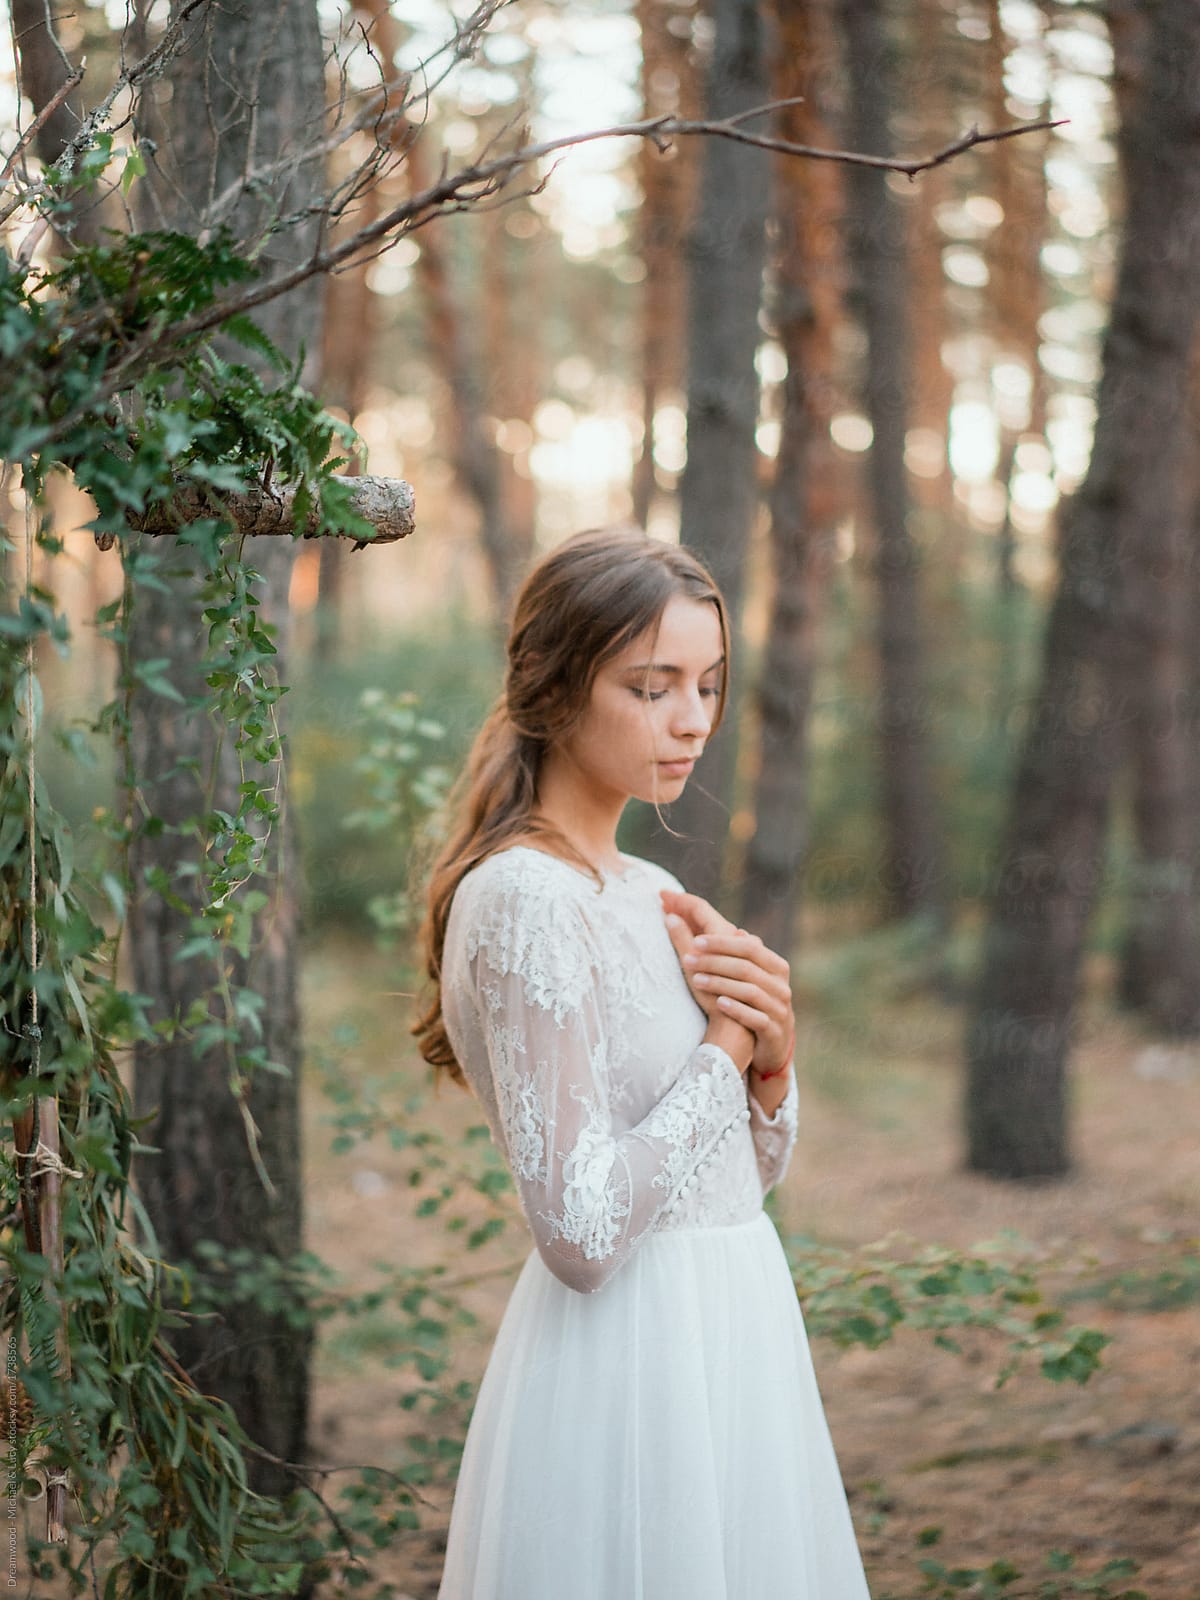 Sensual Model In Gentle Dress In Woods By Stocksy Contributor Dreamwood Photography Stocksy